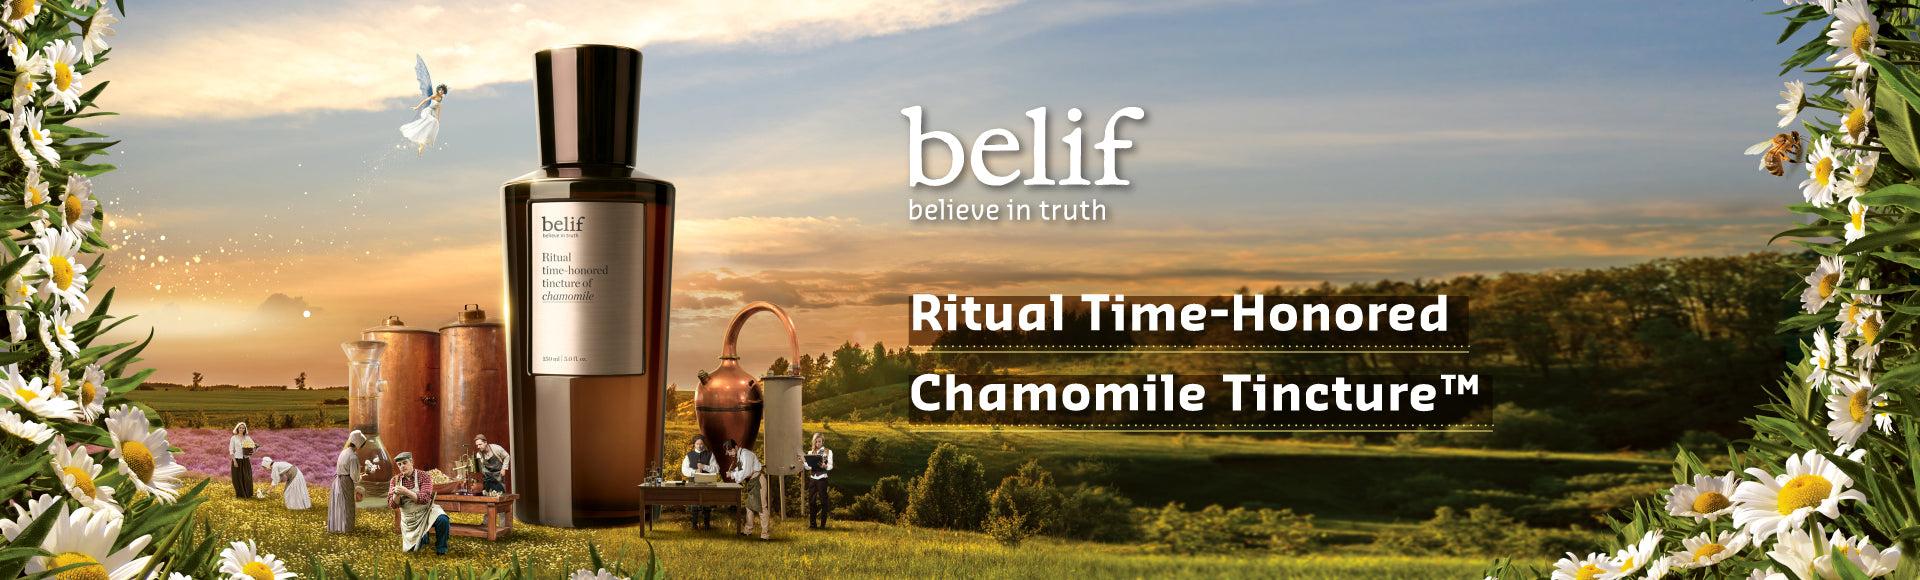 Belif Ritual Time-Honored Tincture of Chamomile 75ml Skincare Tone Moisture